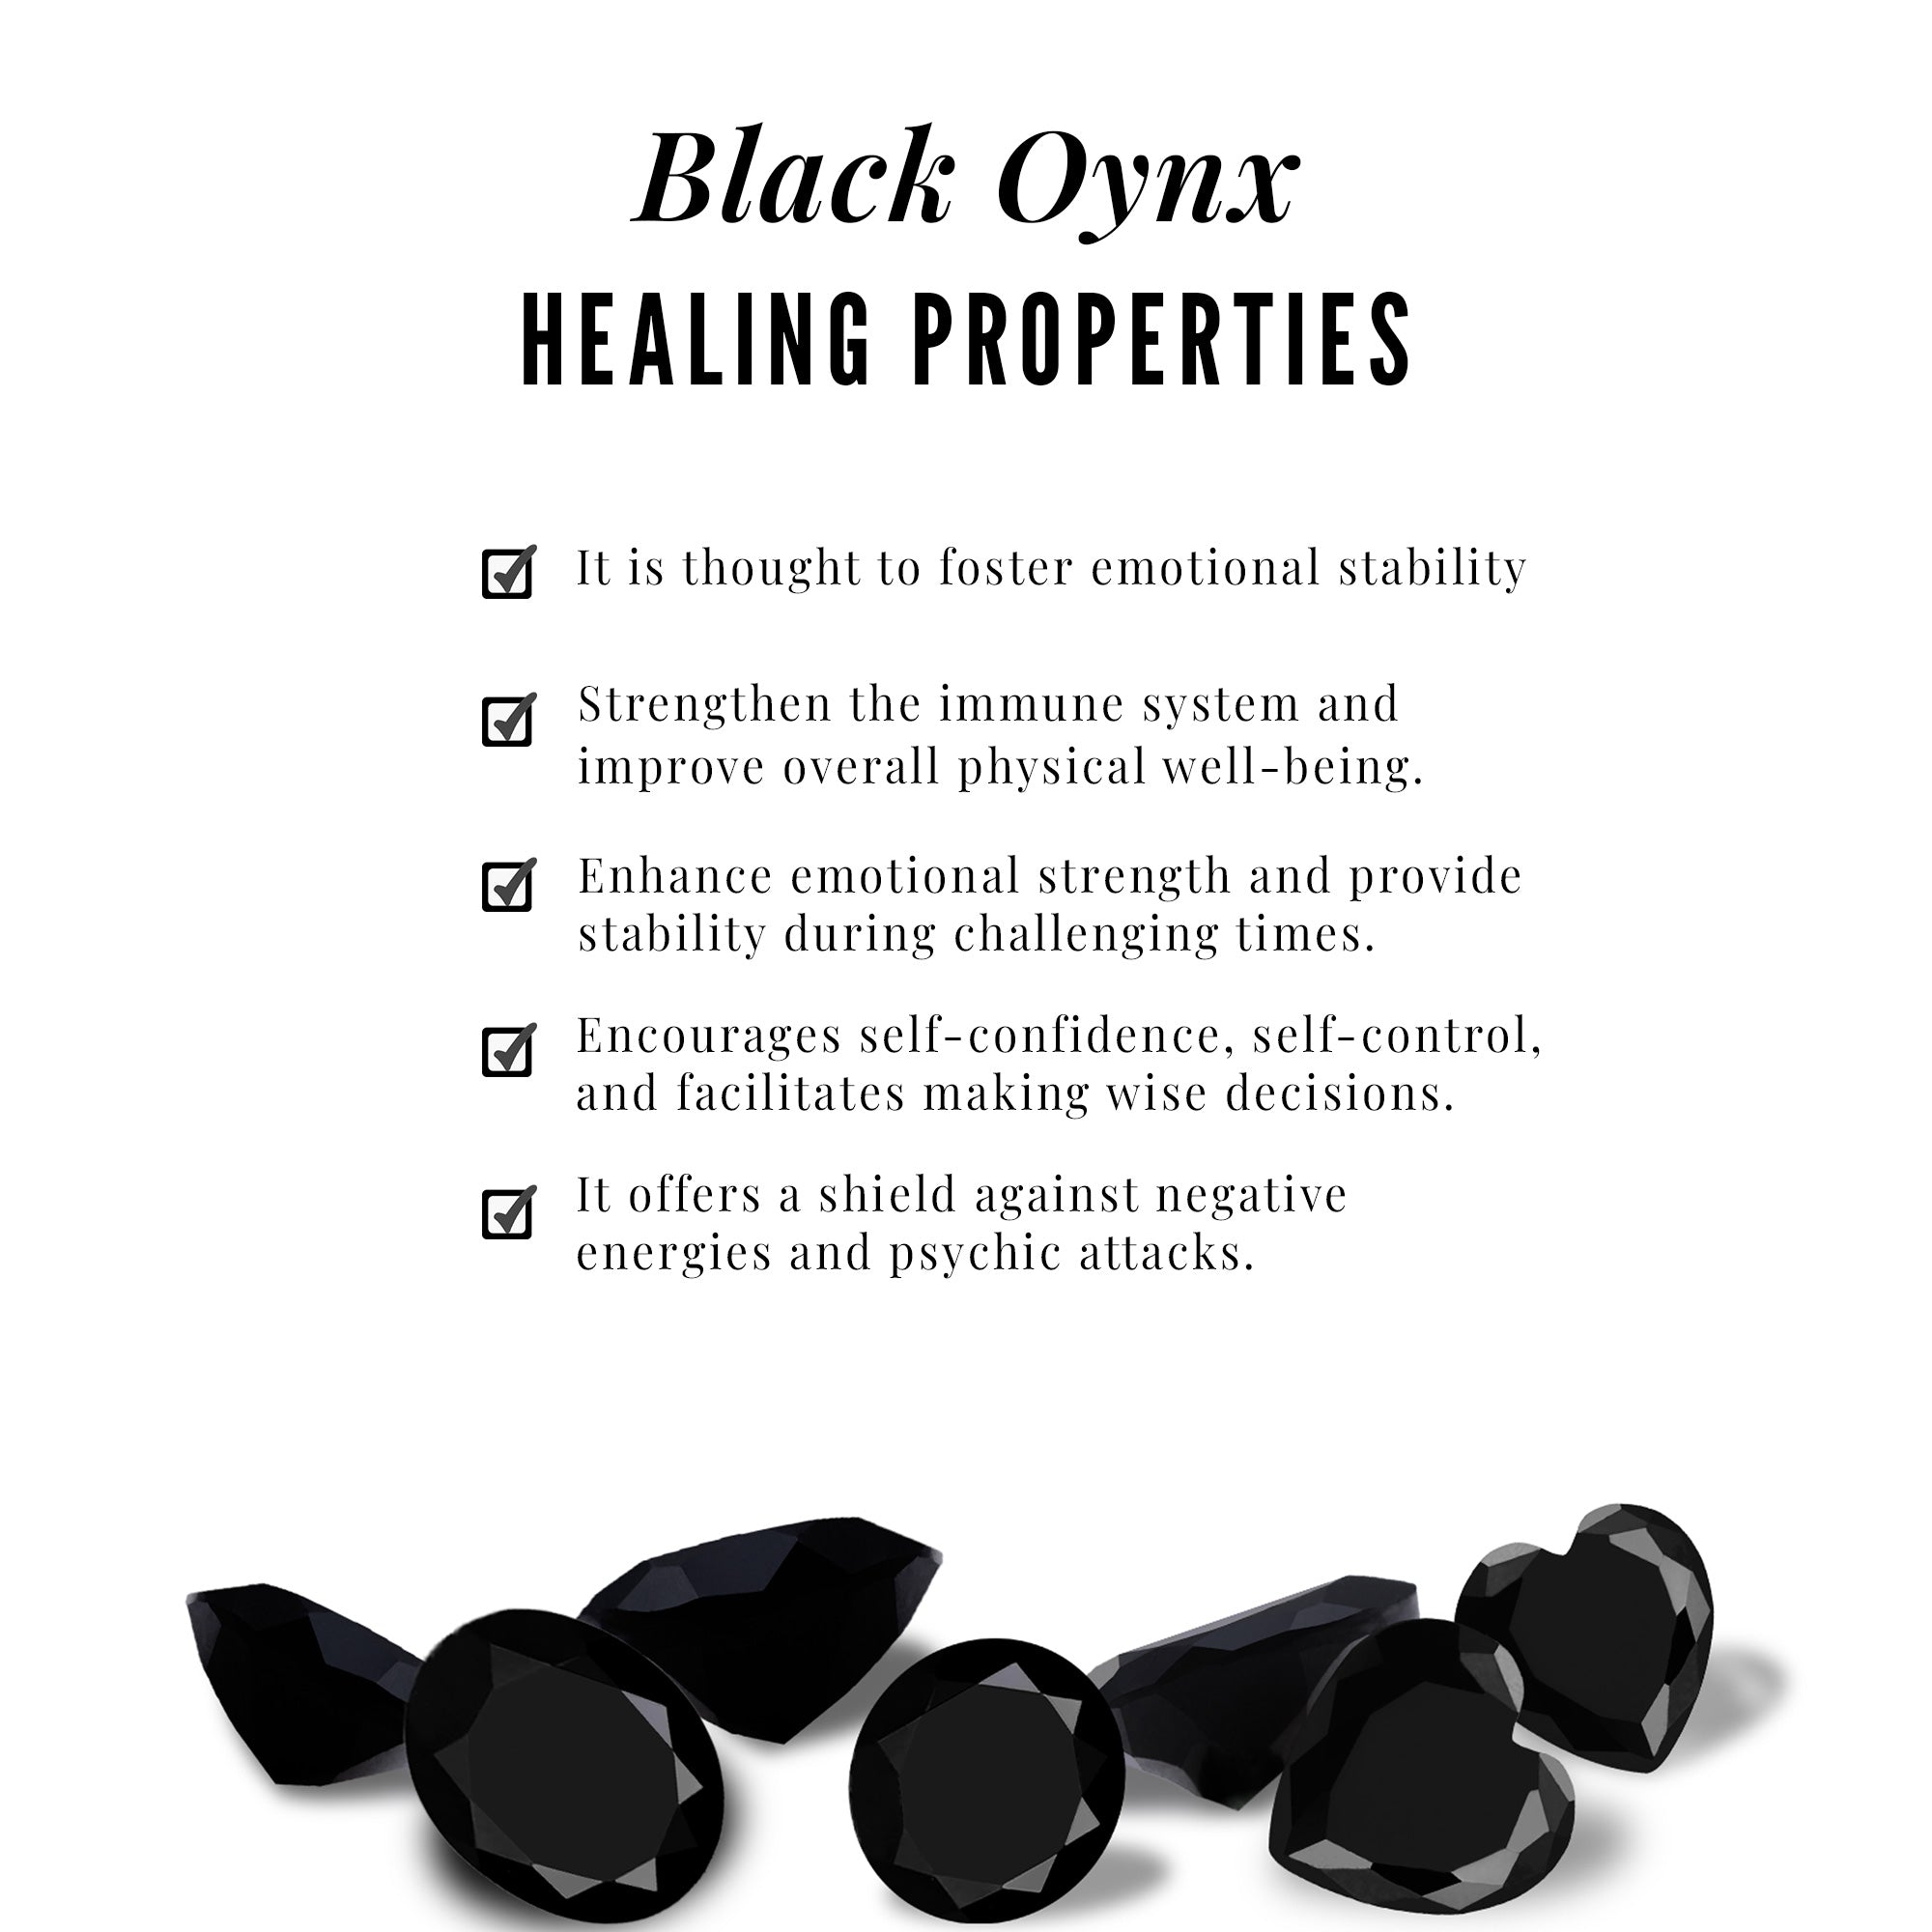 Real Black Onyx and Diamond Heart Dangle Pendant Black Onyx - ( AAA ) - Quality - Rosec Jewels